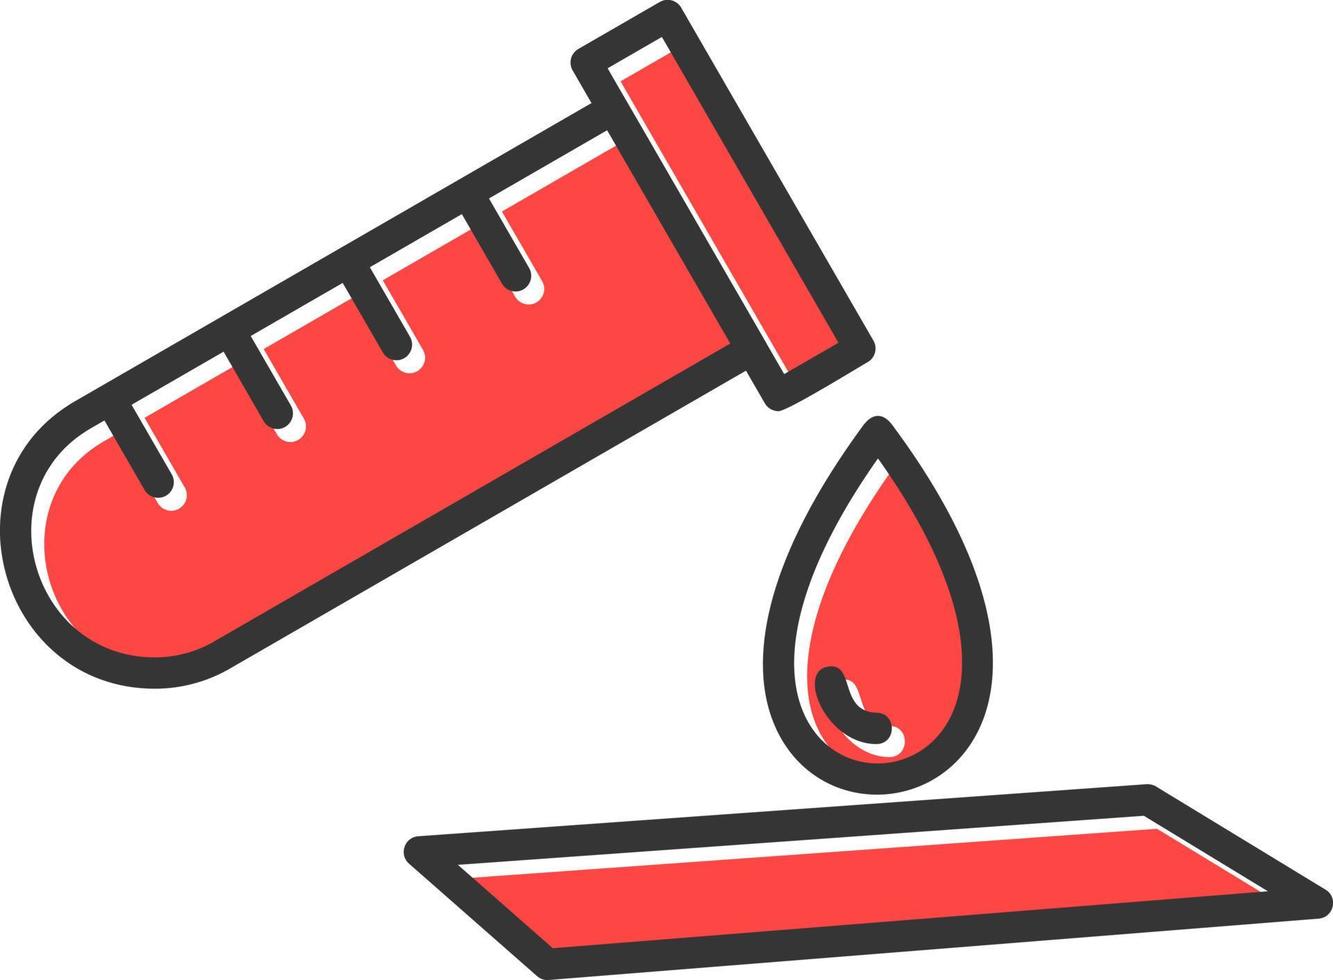 diseño de icono creativo de análisis de sangre vector